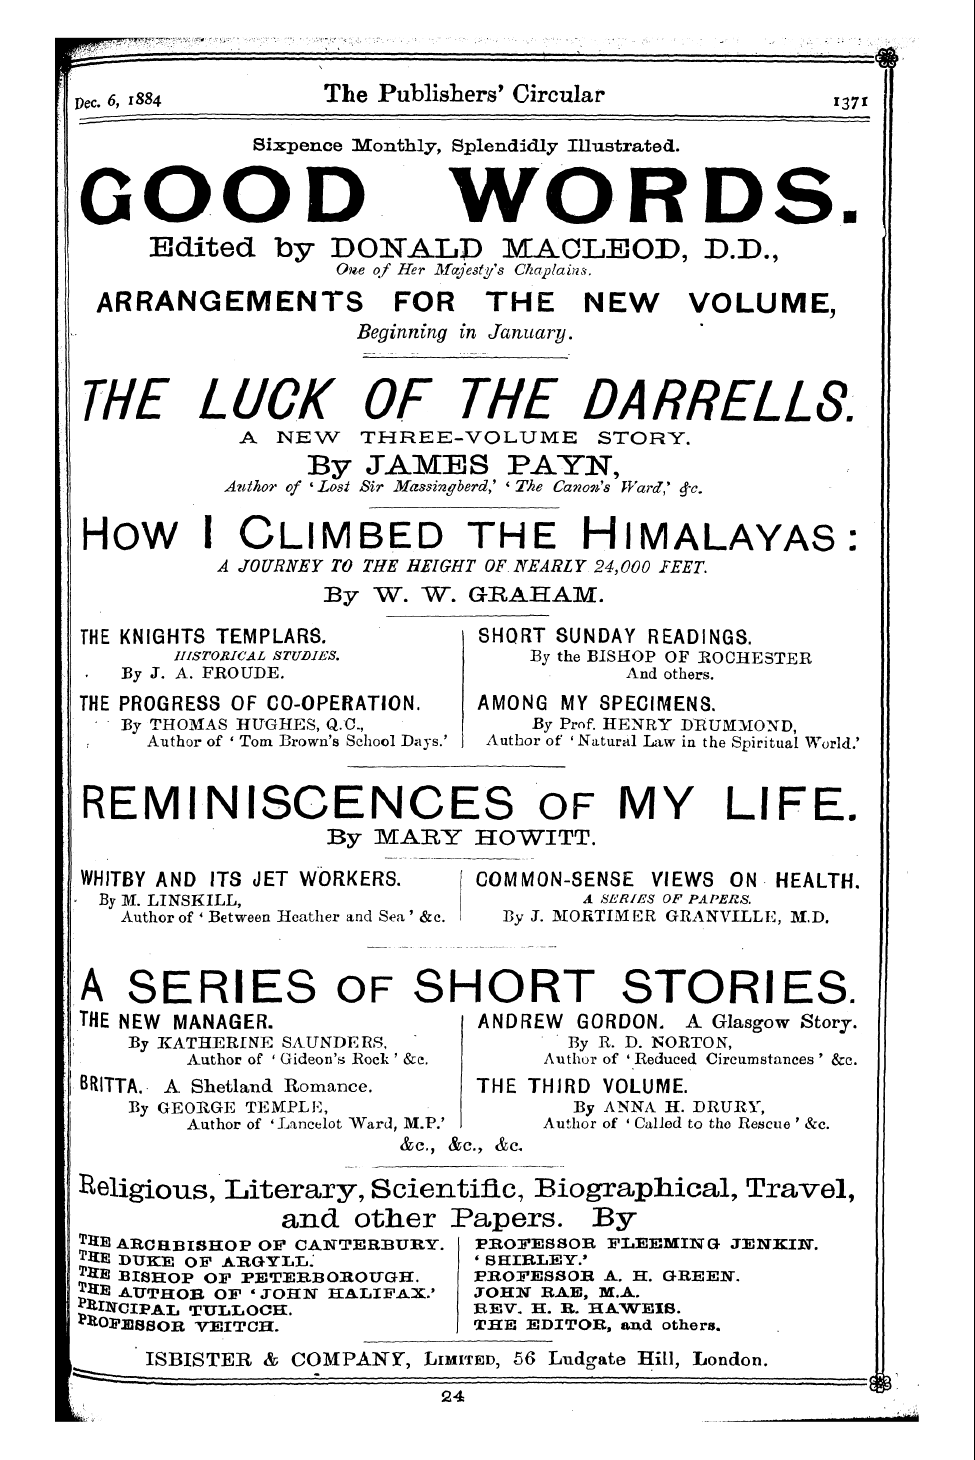 Publishers’ Circular (1880-1890): jS F Y, 1st edition: 215